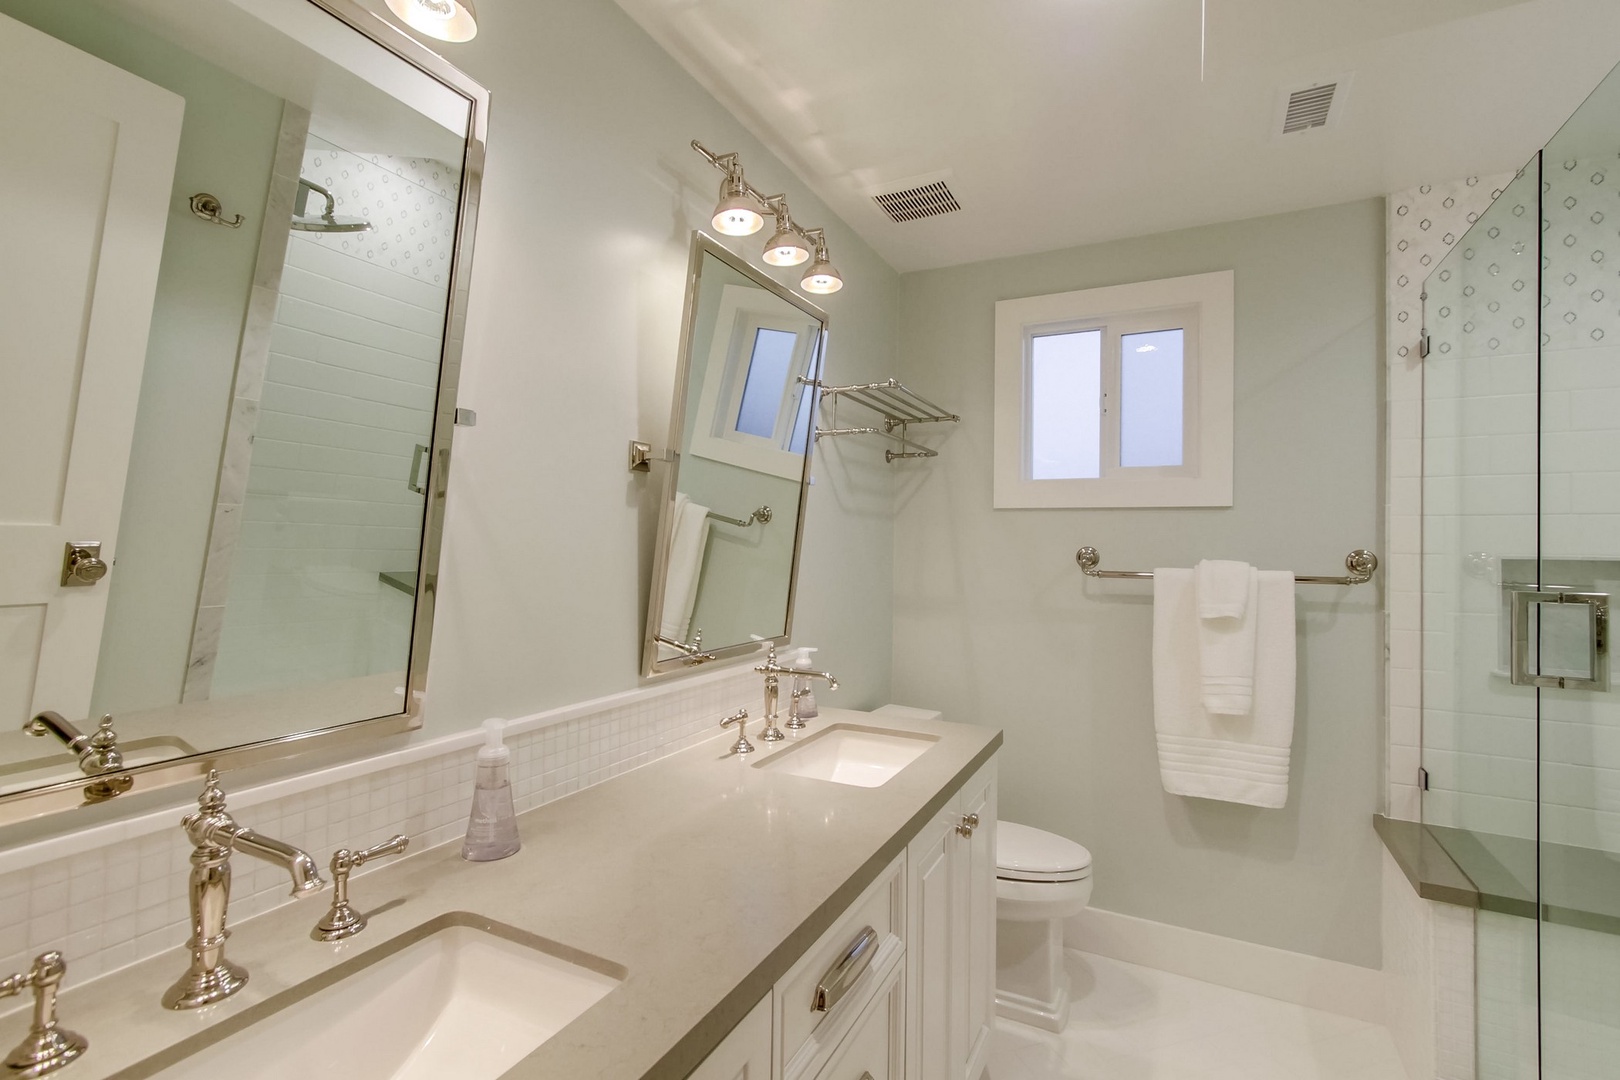 Dual sink vanity and shower